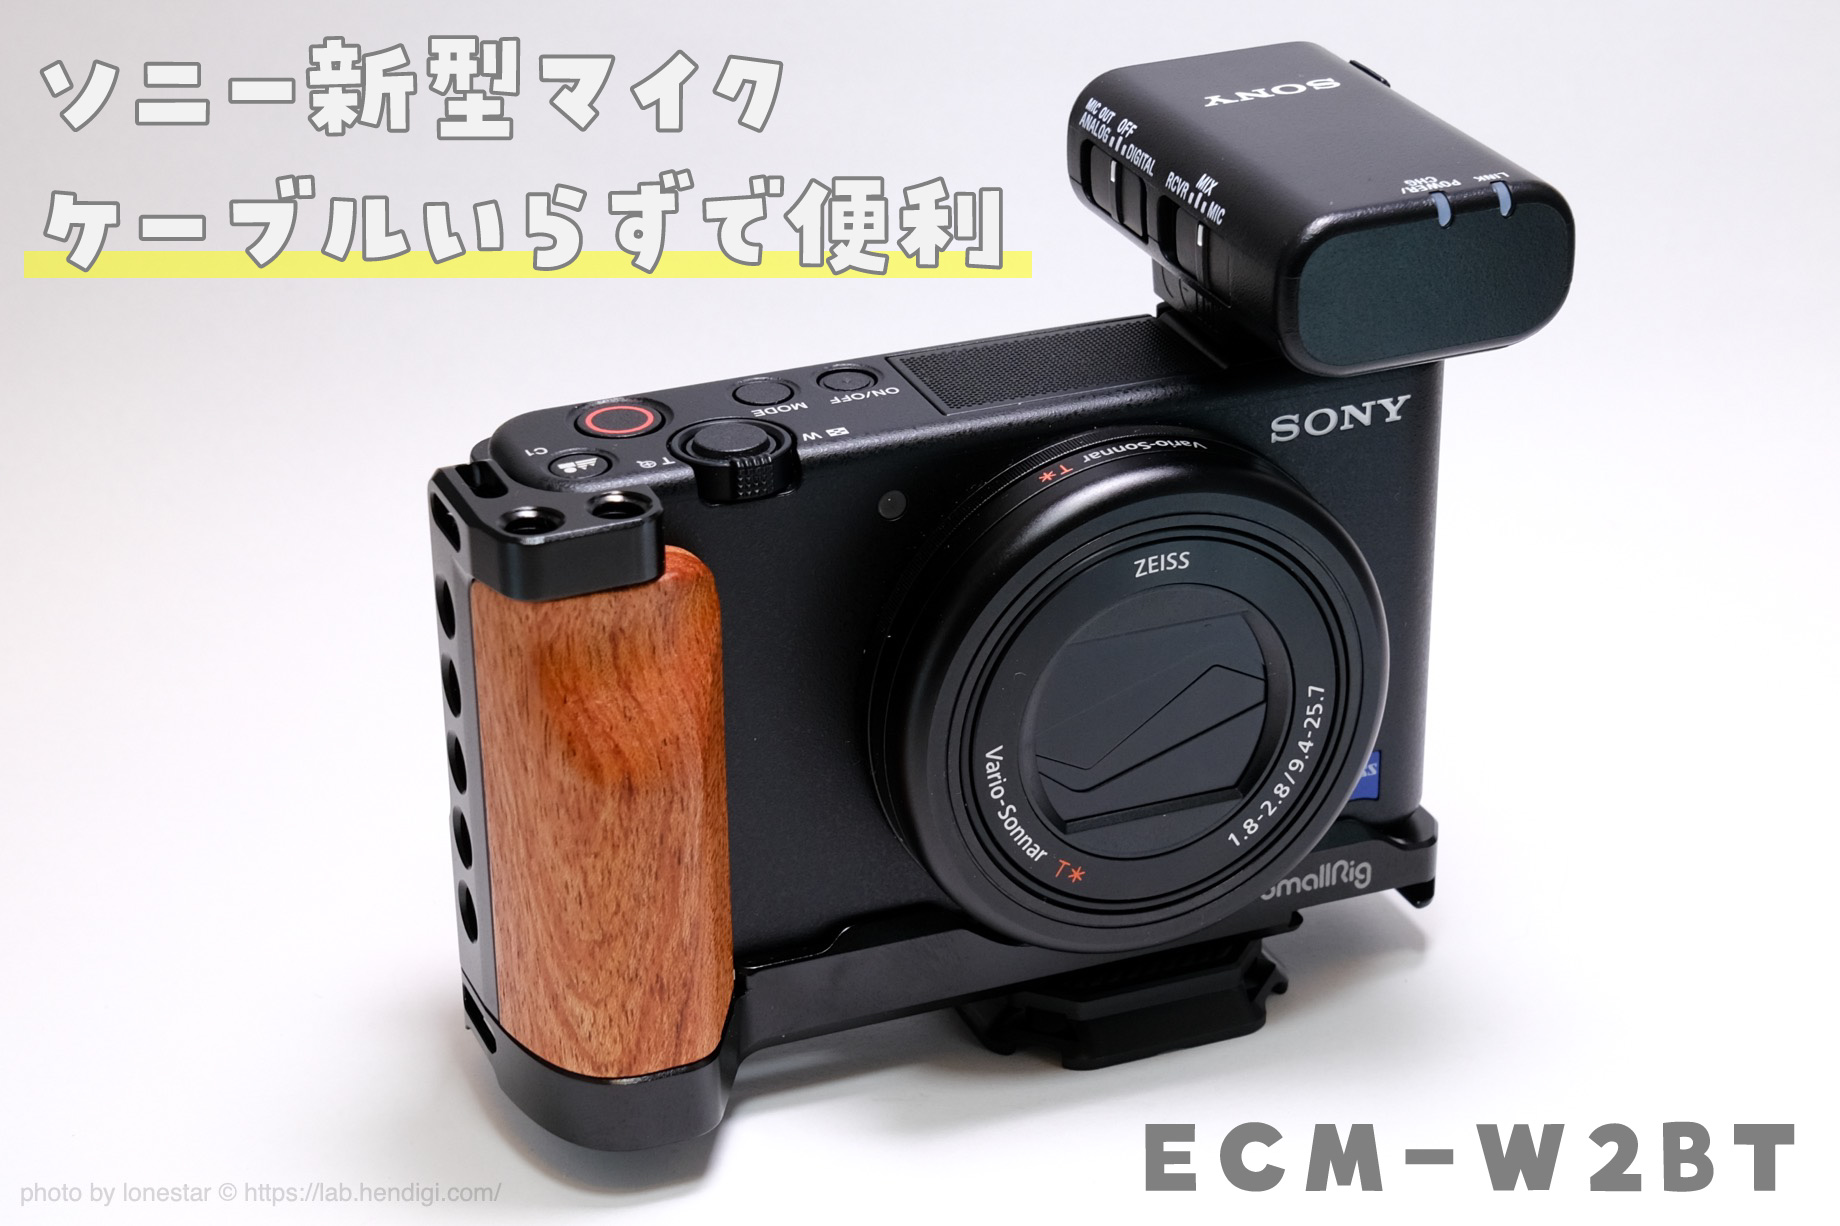 【SONY】ソニー ECM-W2BT [ワイヤレスマイクロホン] その他 オーディオ機器 家電・スマホ・カメラ お得品